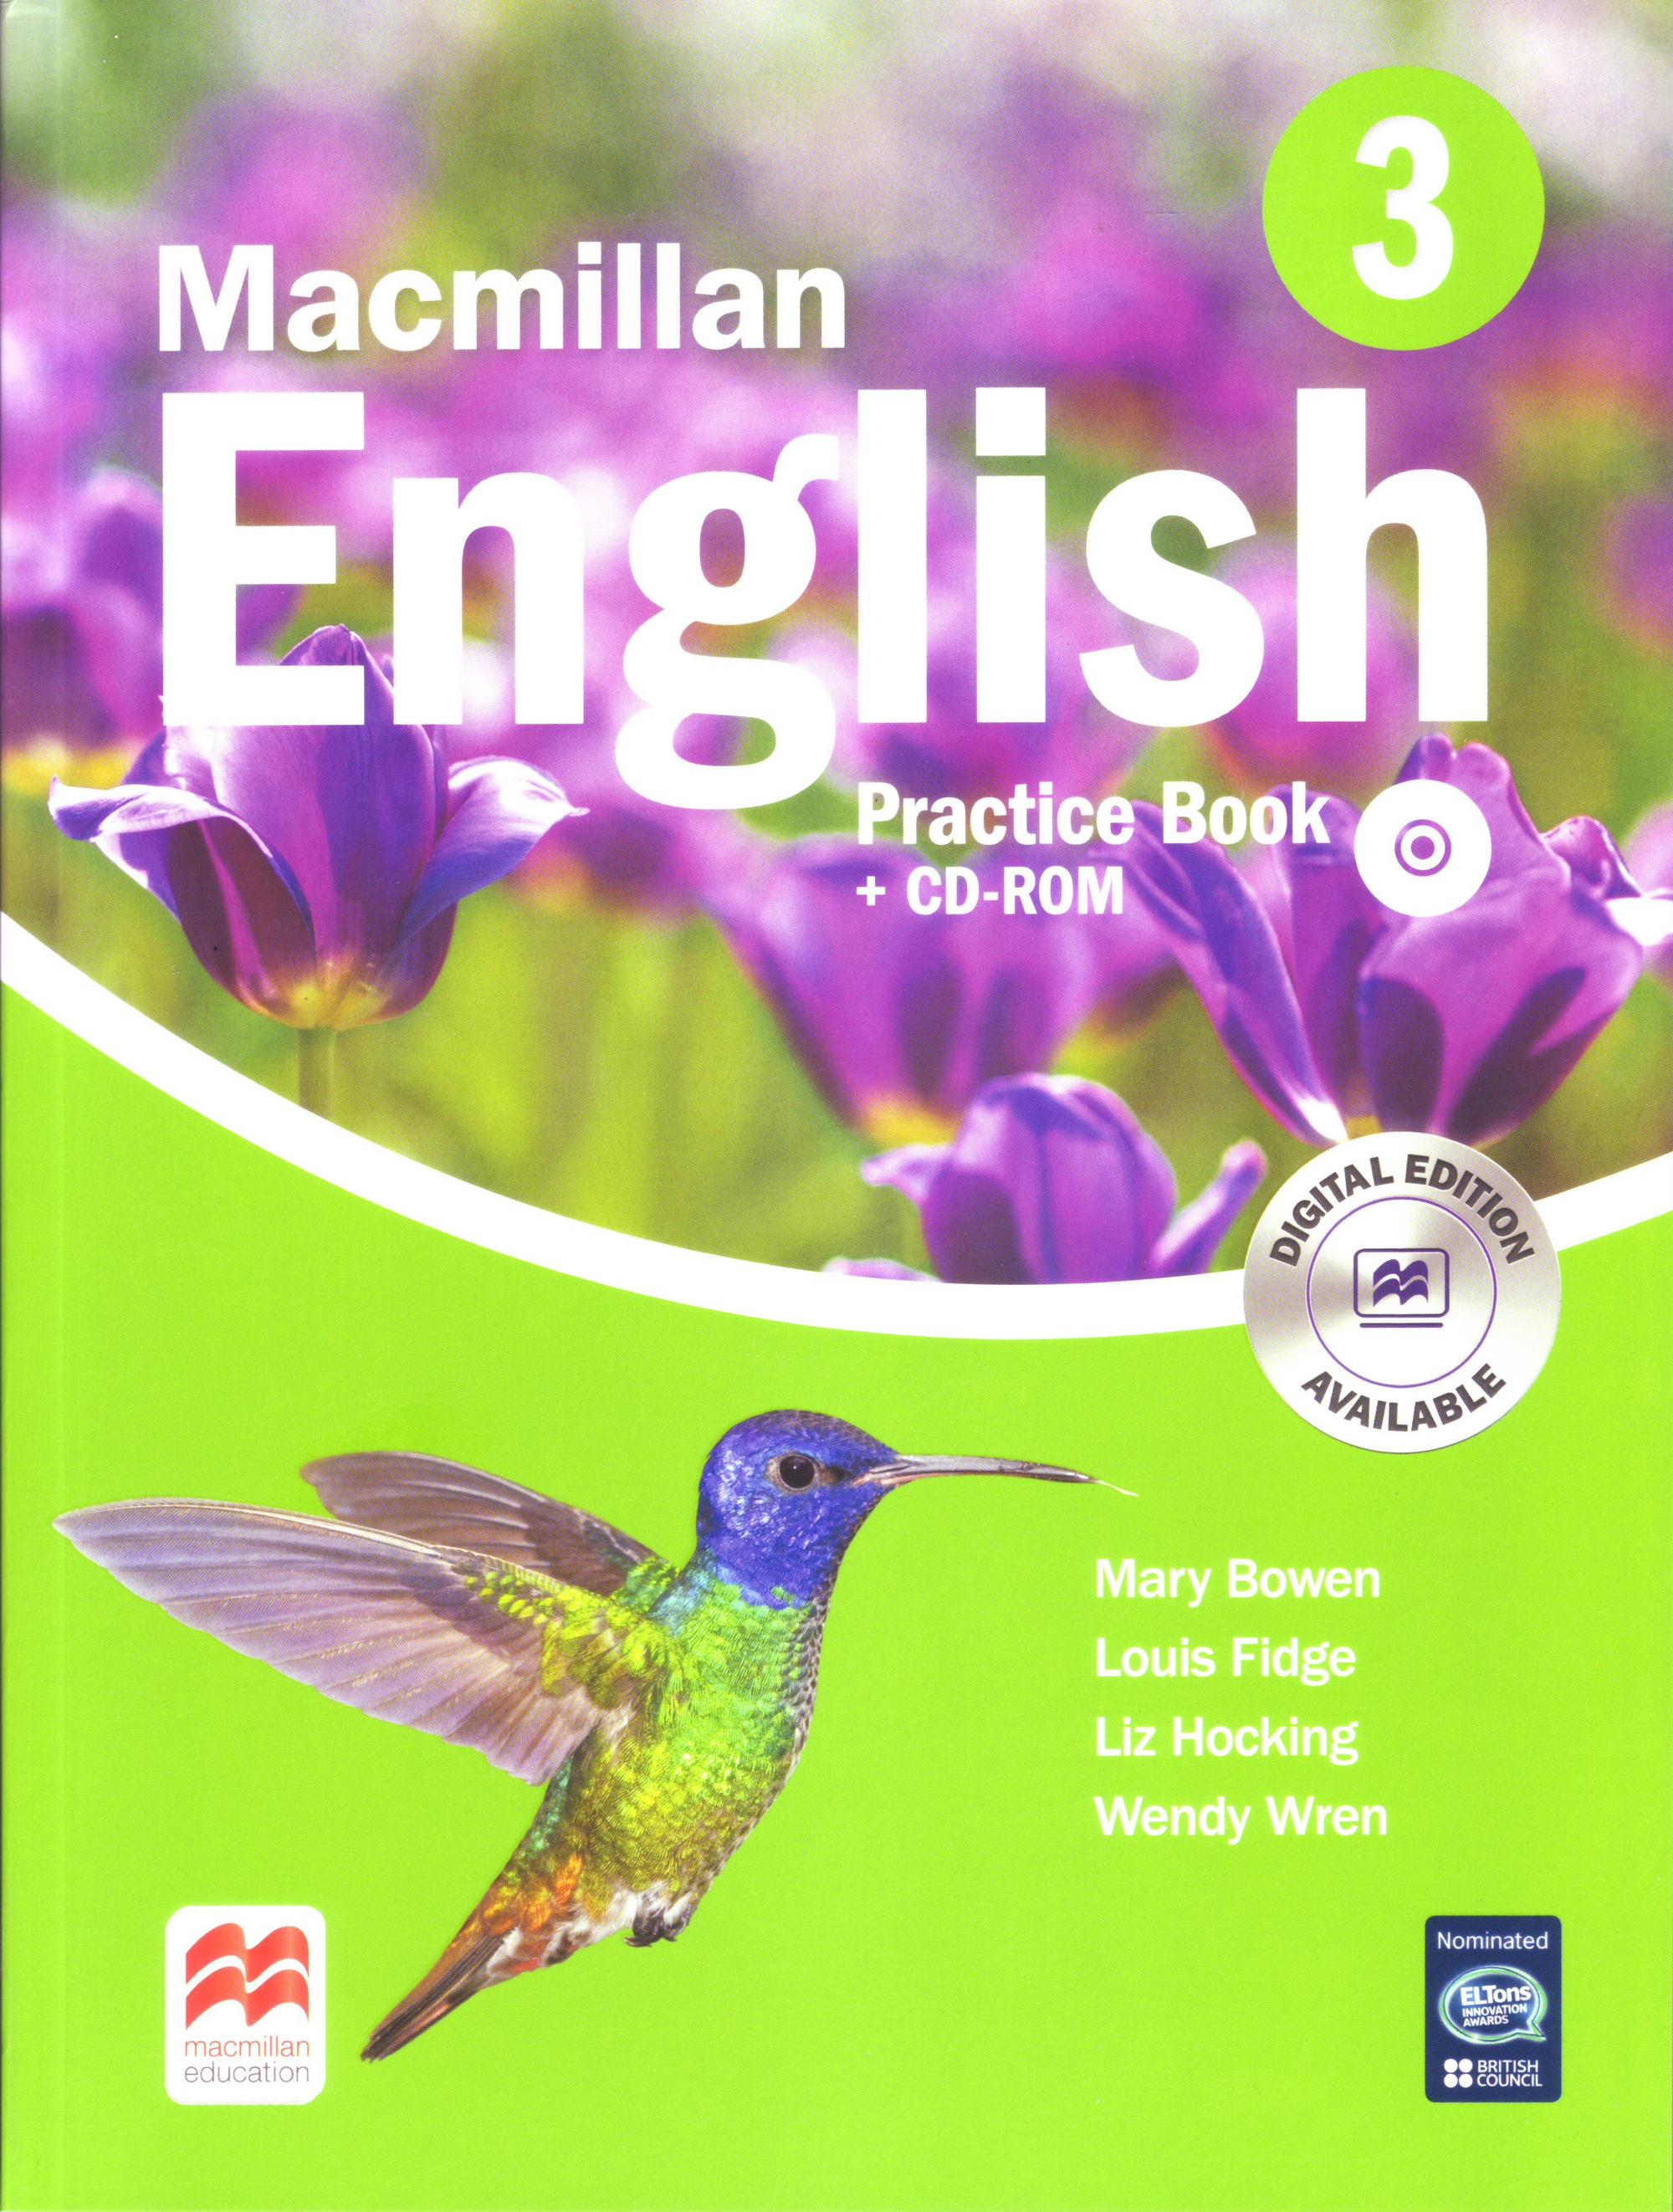 Macmillan s book. Macmillan учебники. Учебник английского Macmillan. Учебник Macmillan English. Macmillan Education учебник.